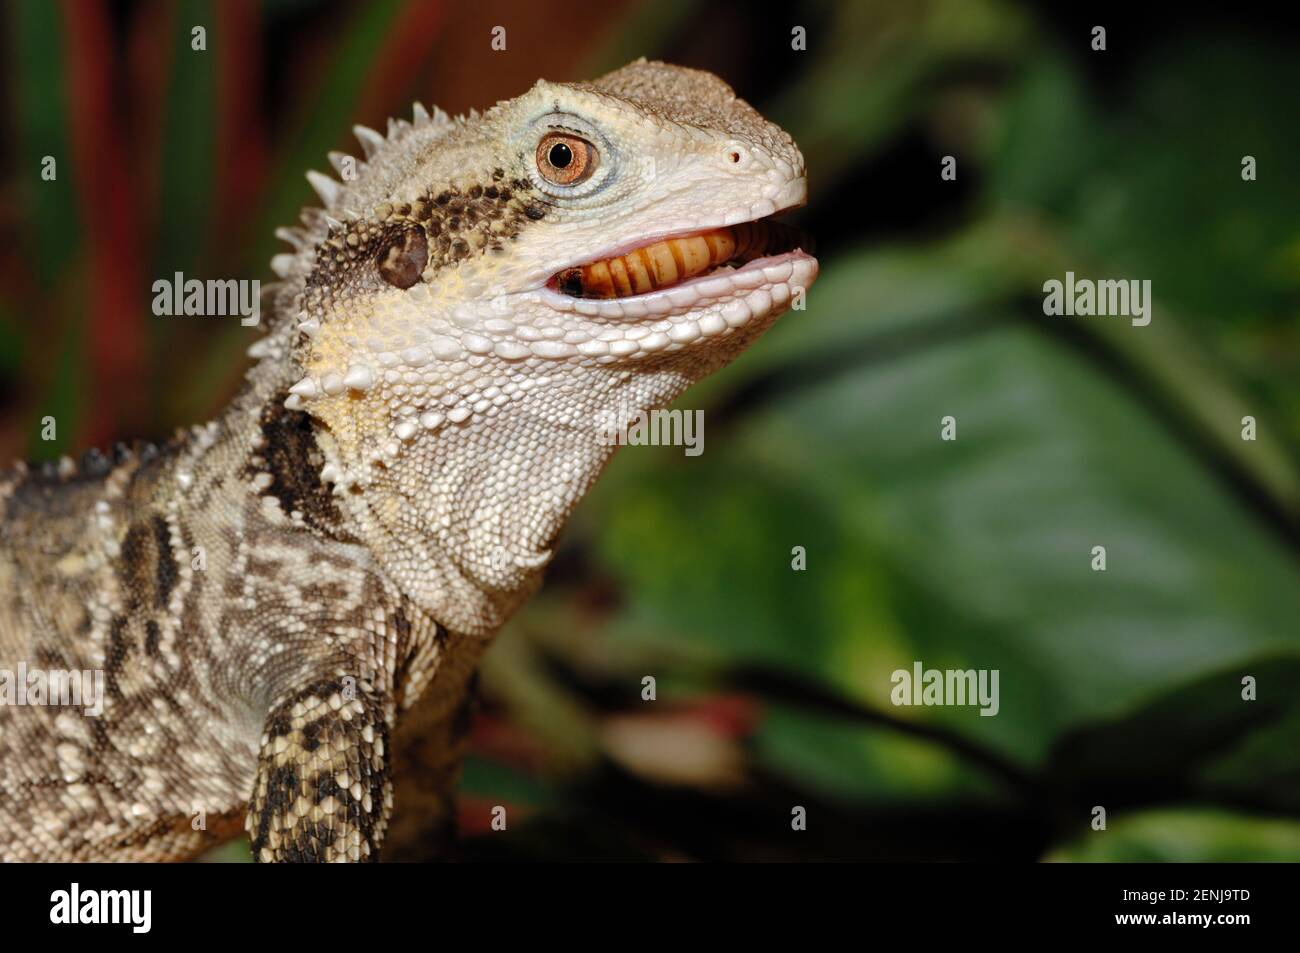 Tier; Tiere; Reptil; reptilien; wasseragame; Australien; australische, Agame; )Physignatus lesueurii); Portrait Stock Photo